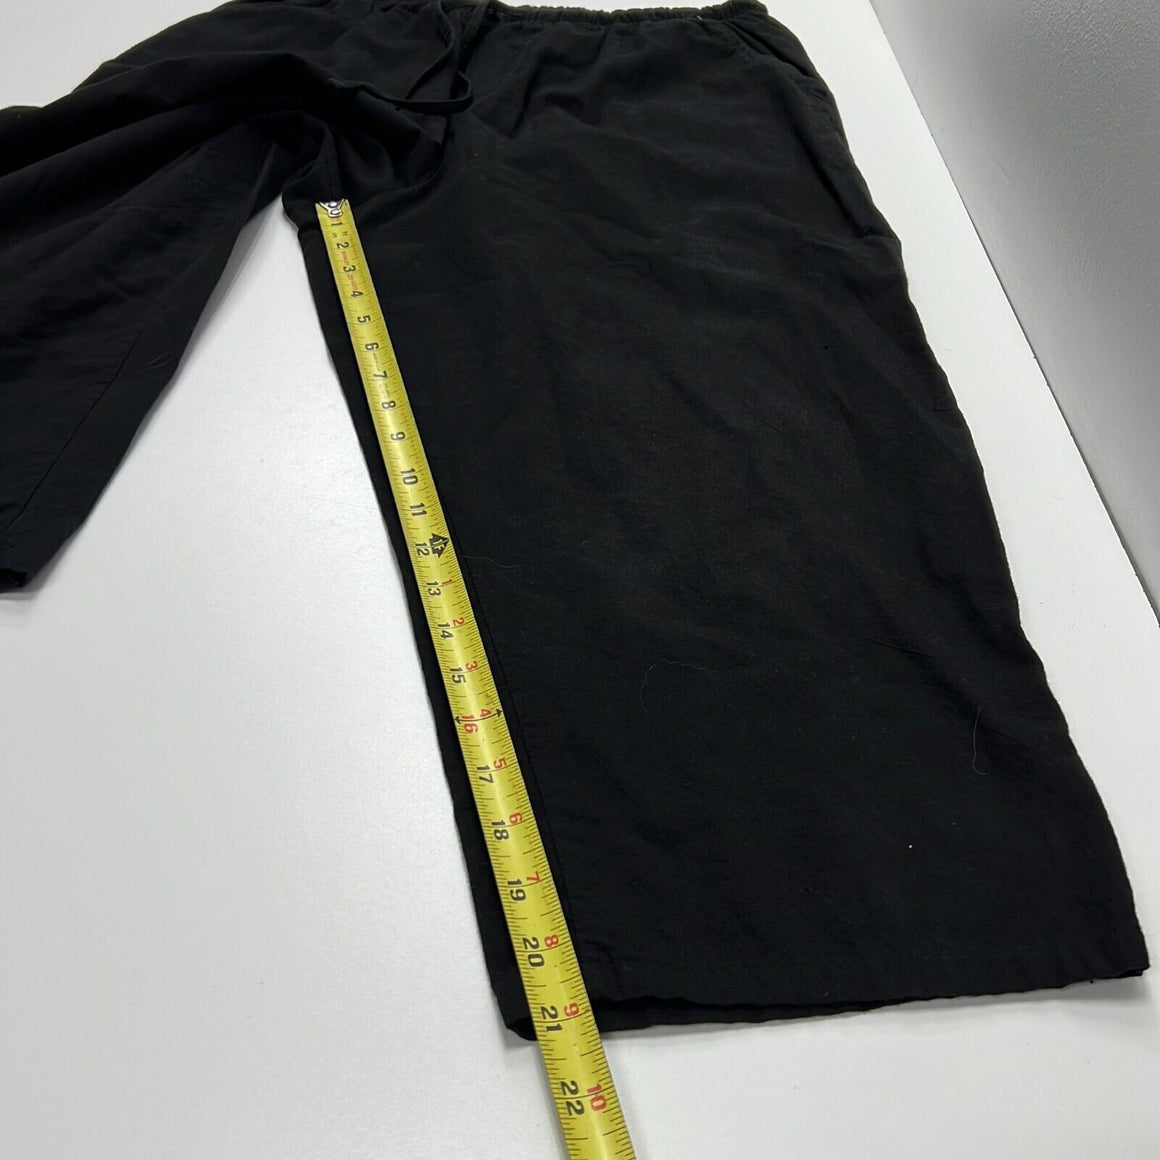 Bobbie Brooks Woman's Black Pants - Size 2X